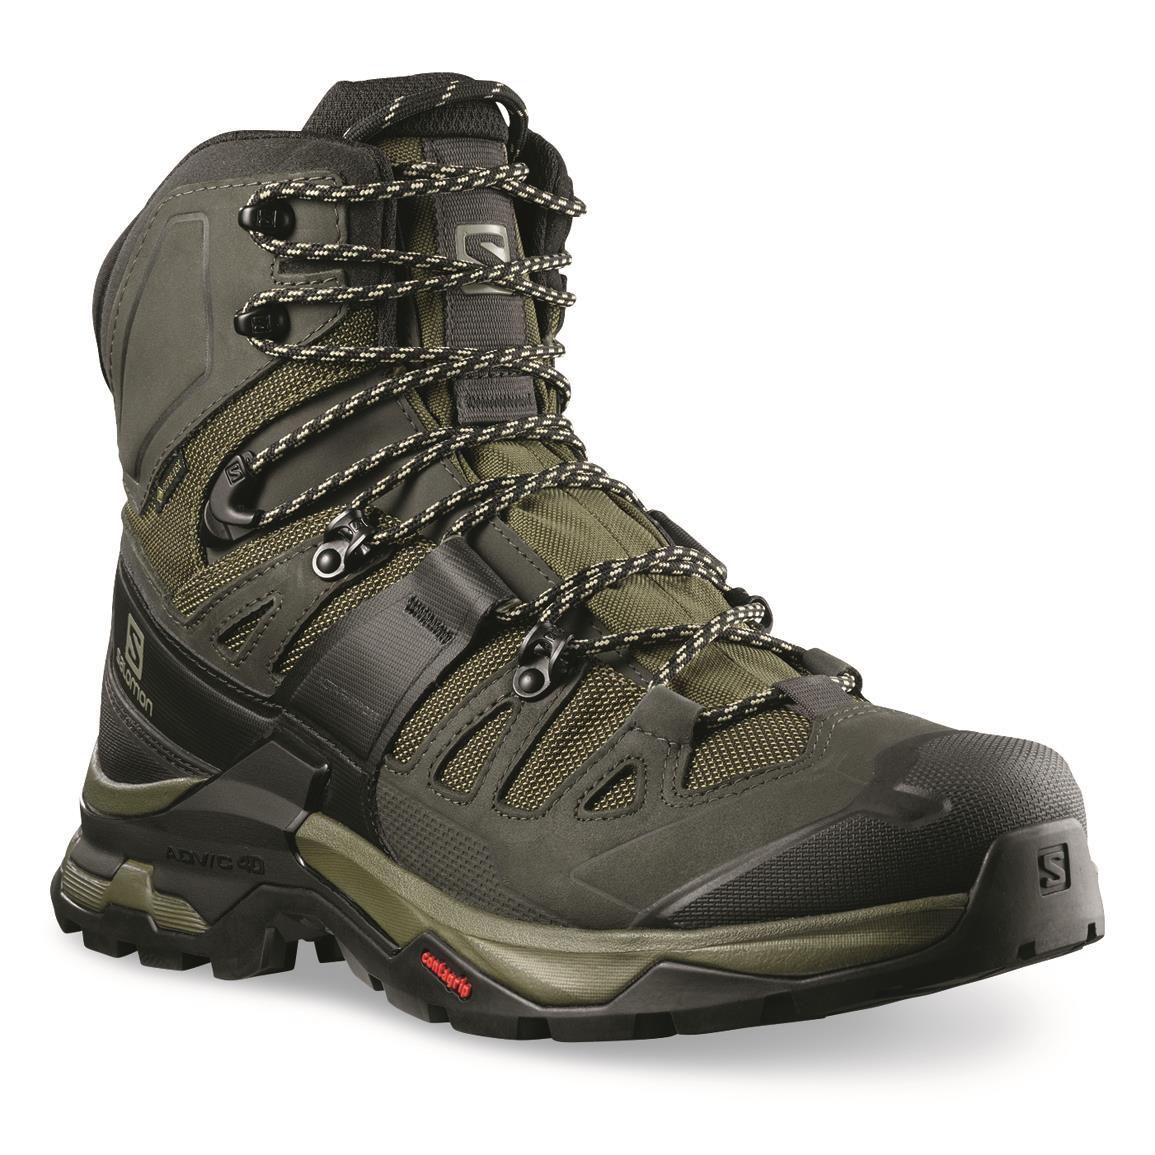 Salomon Men's Quest 4 GTX Waterproof Hiking Boots, GORE-TEX, Olive Night/Peat/Safari